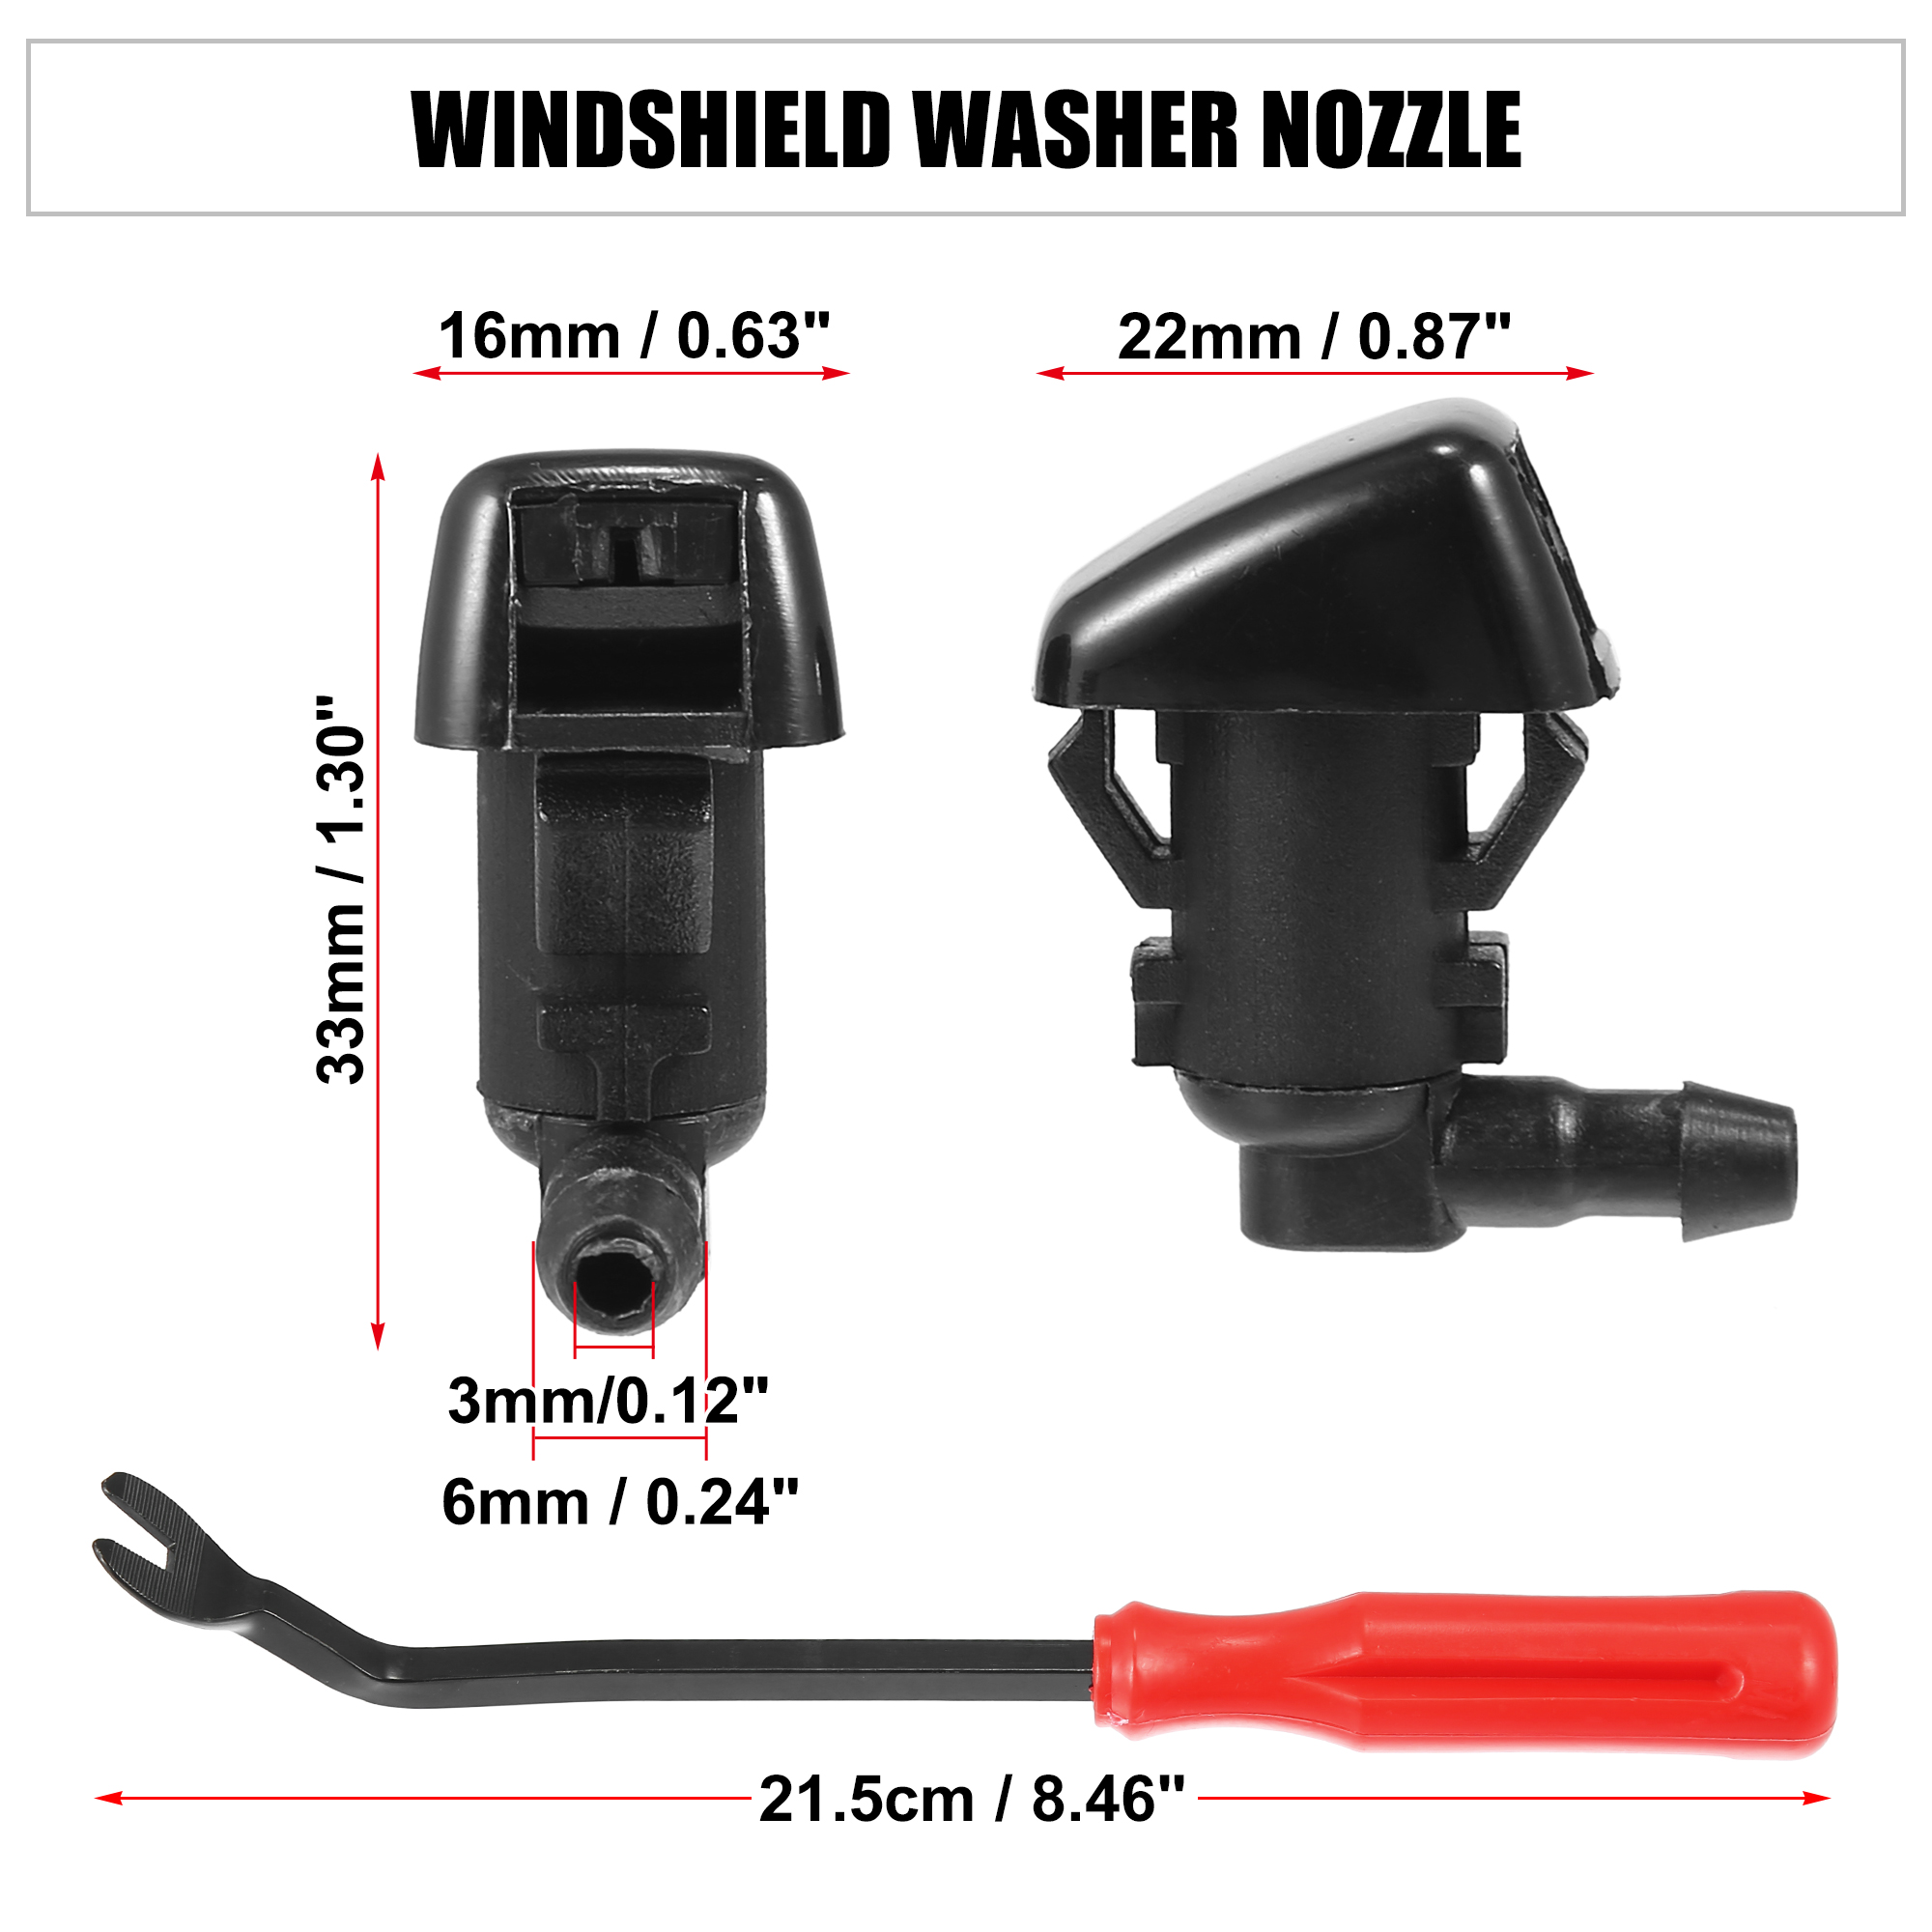 Unique Bargains 13pcs Front Windshield Washer Nozzle Kit 7C3Z17603A for Ford F-250 2008-2010